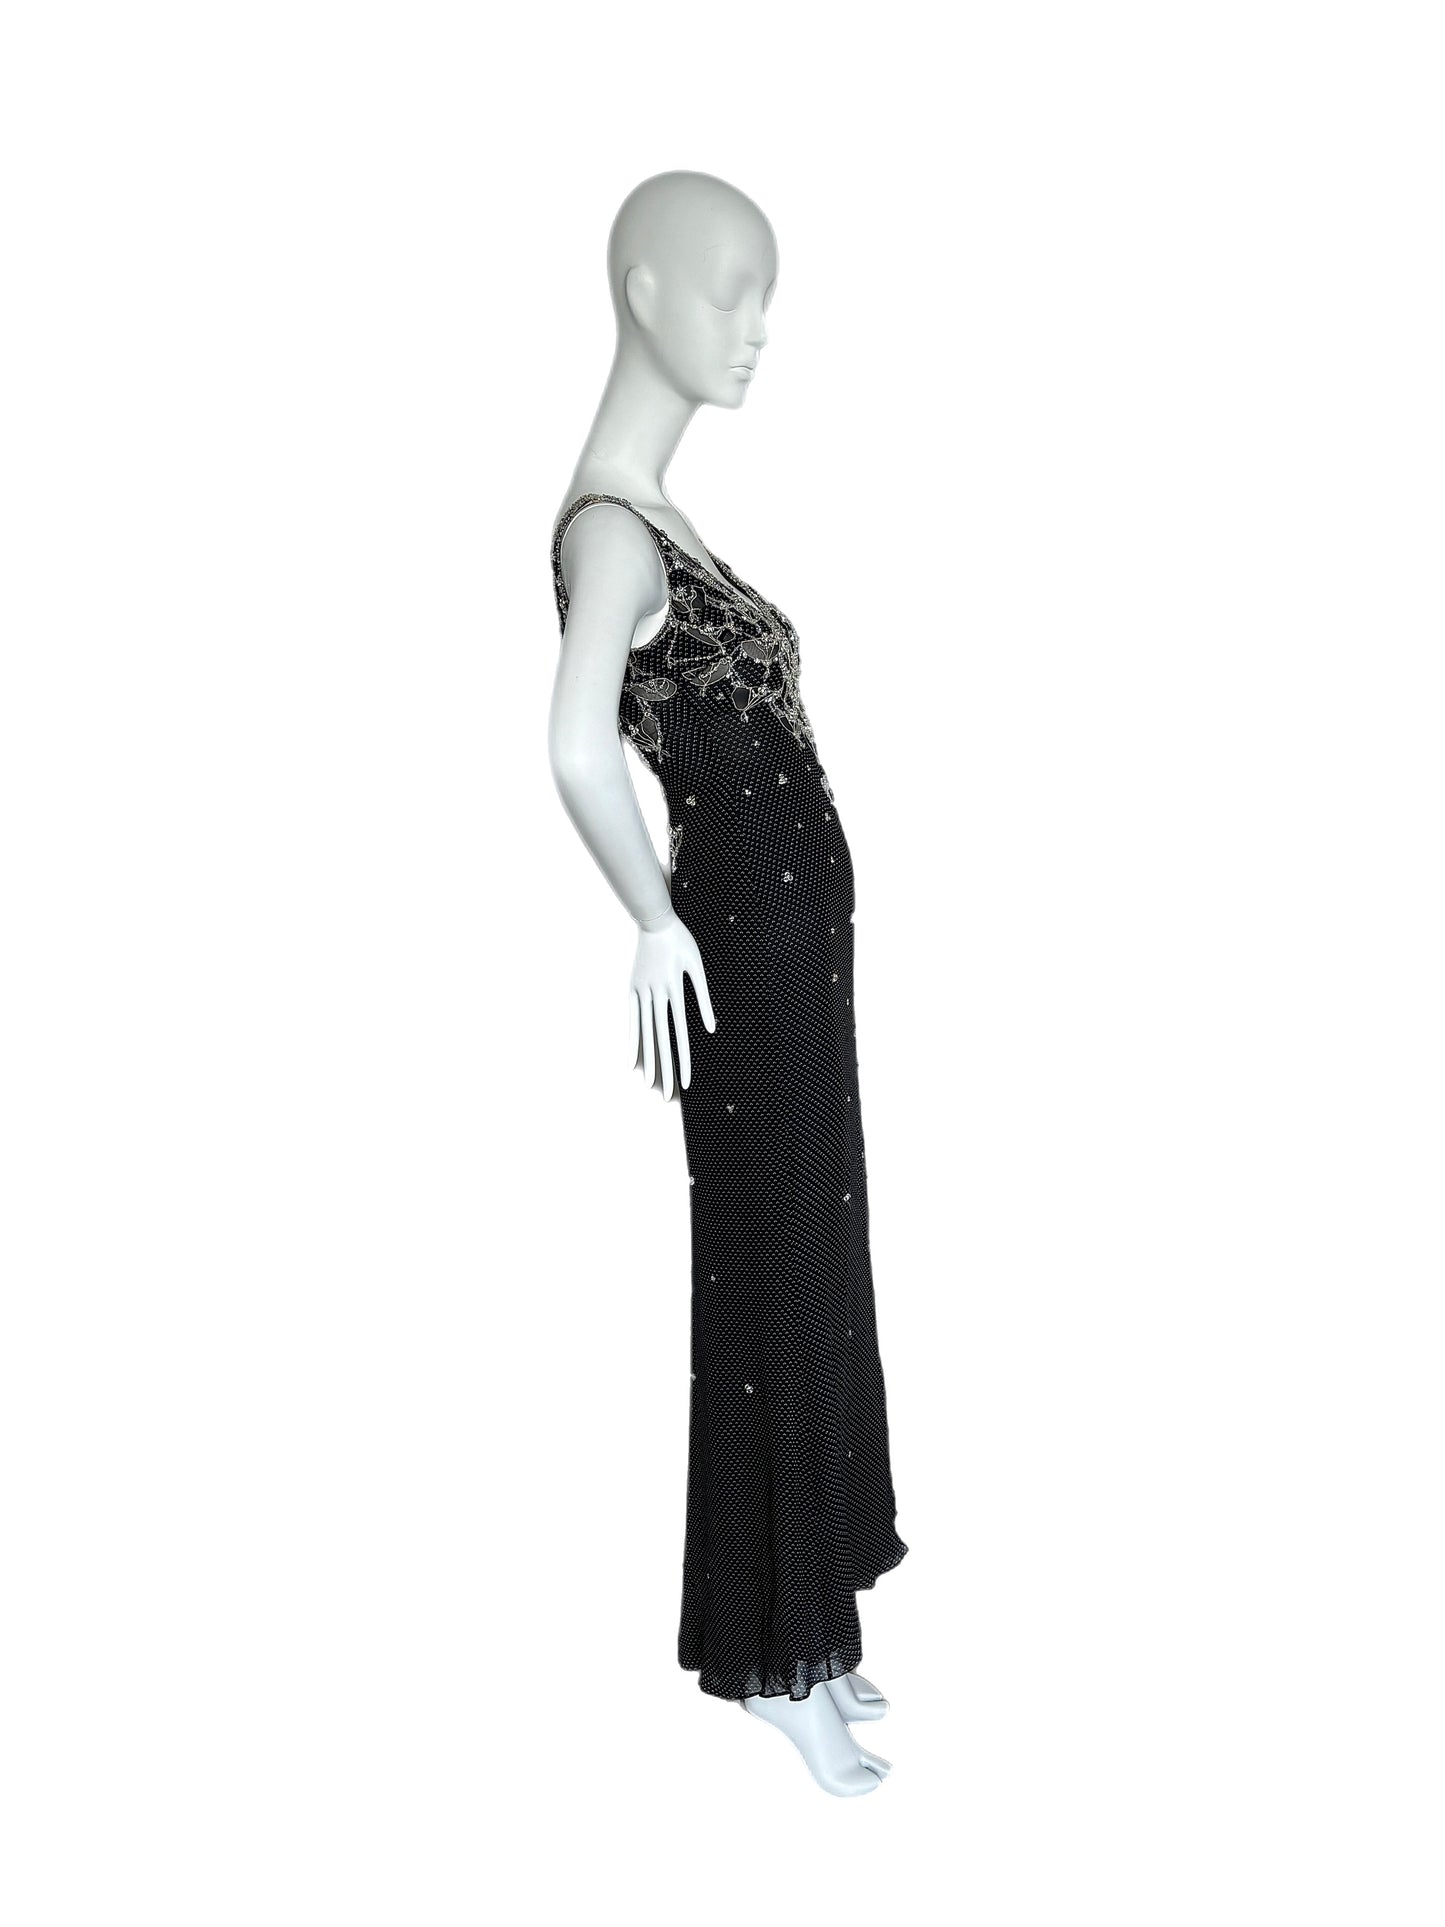 badgley mischka 2002 vintage runway embellished evening gown maxi dress